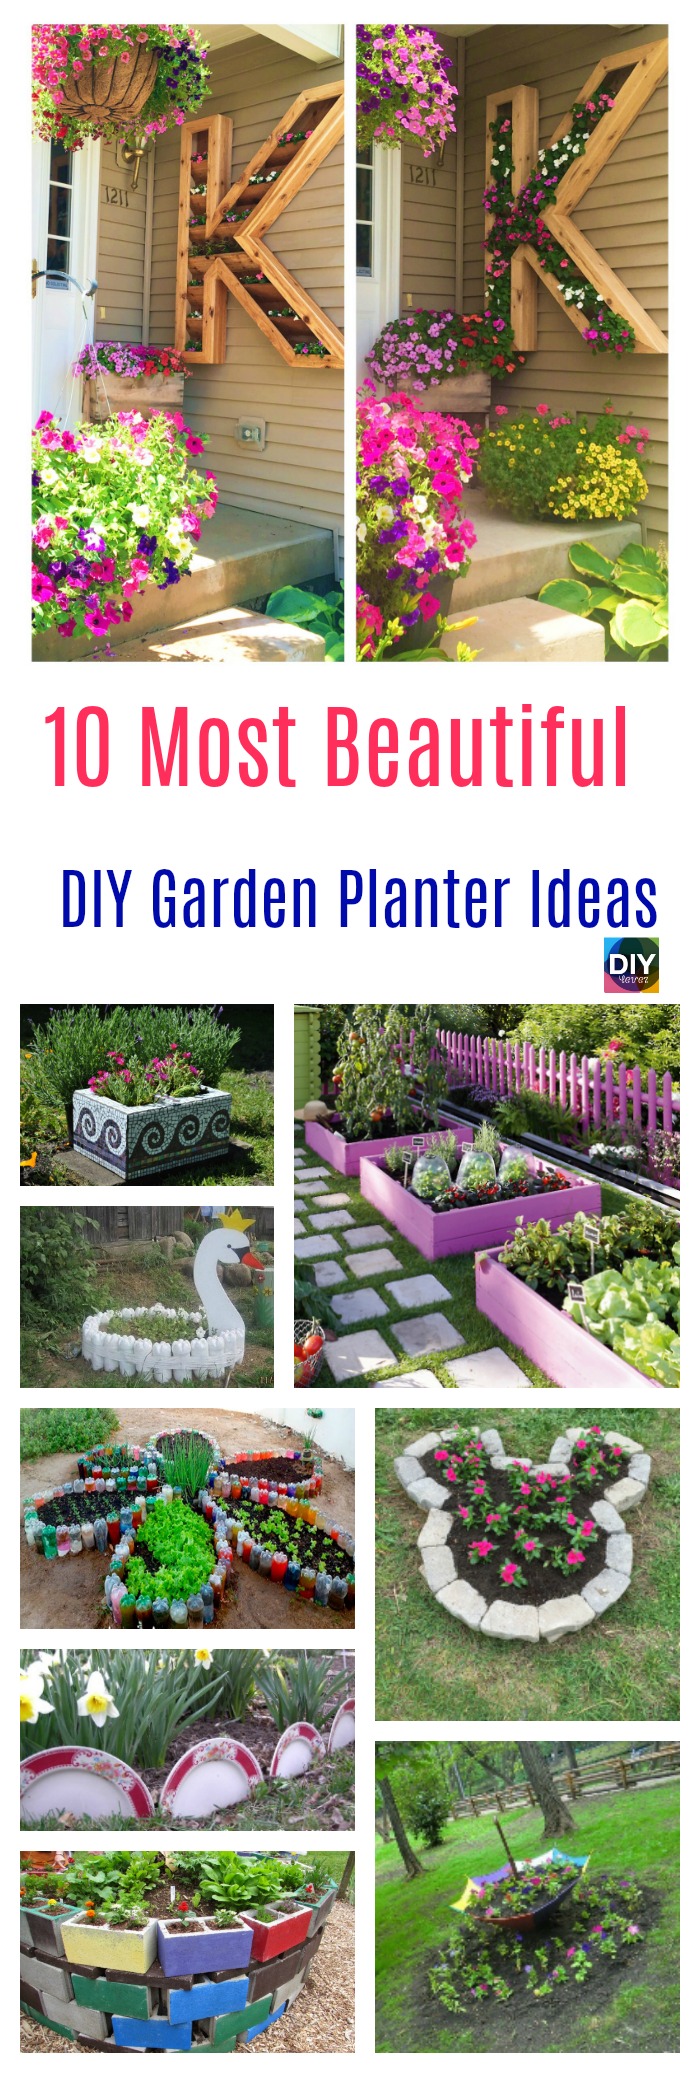 diy4ever- 10 Most Beautiful DIY Garden Planter Ideas